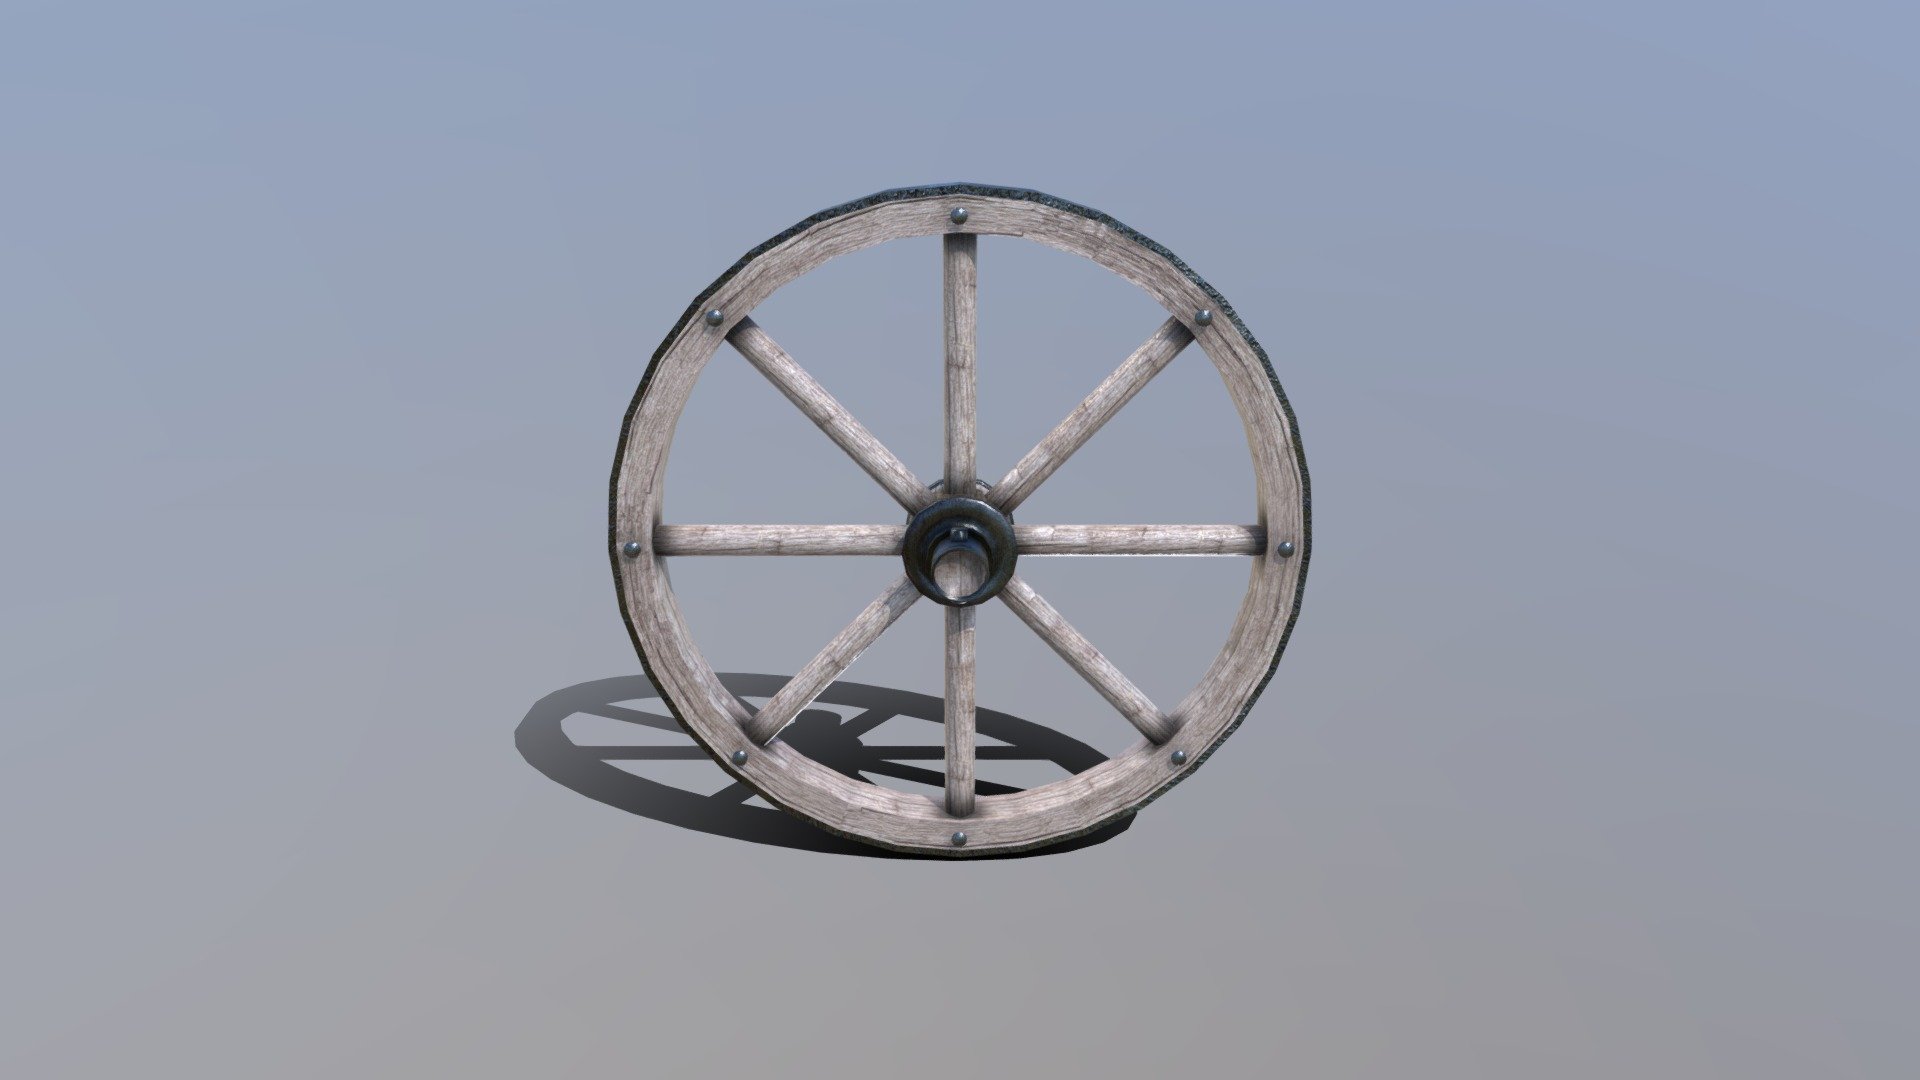 Medieval Cart Wheel